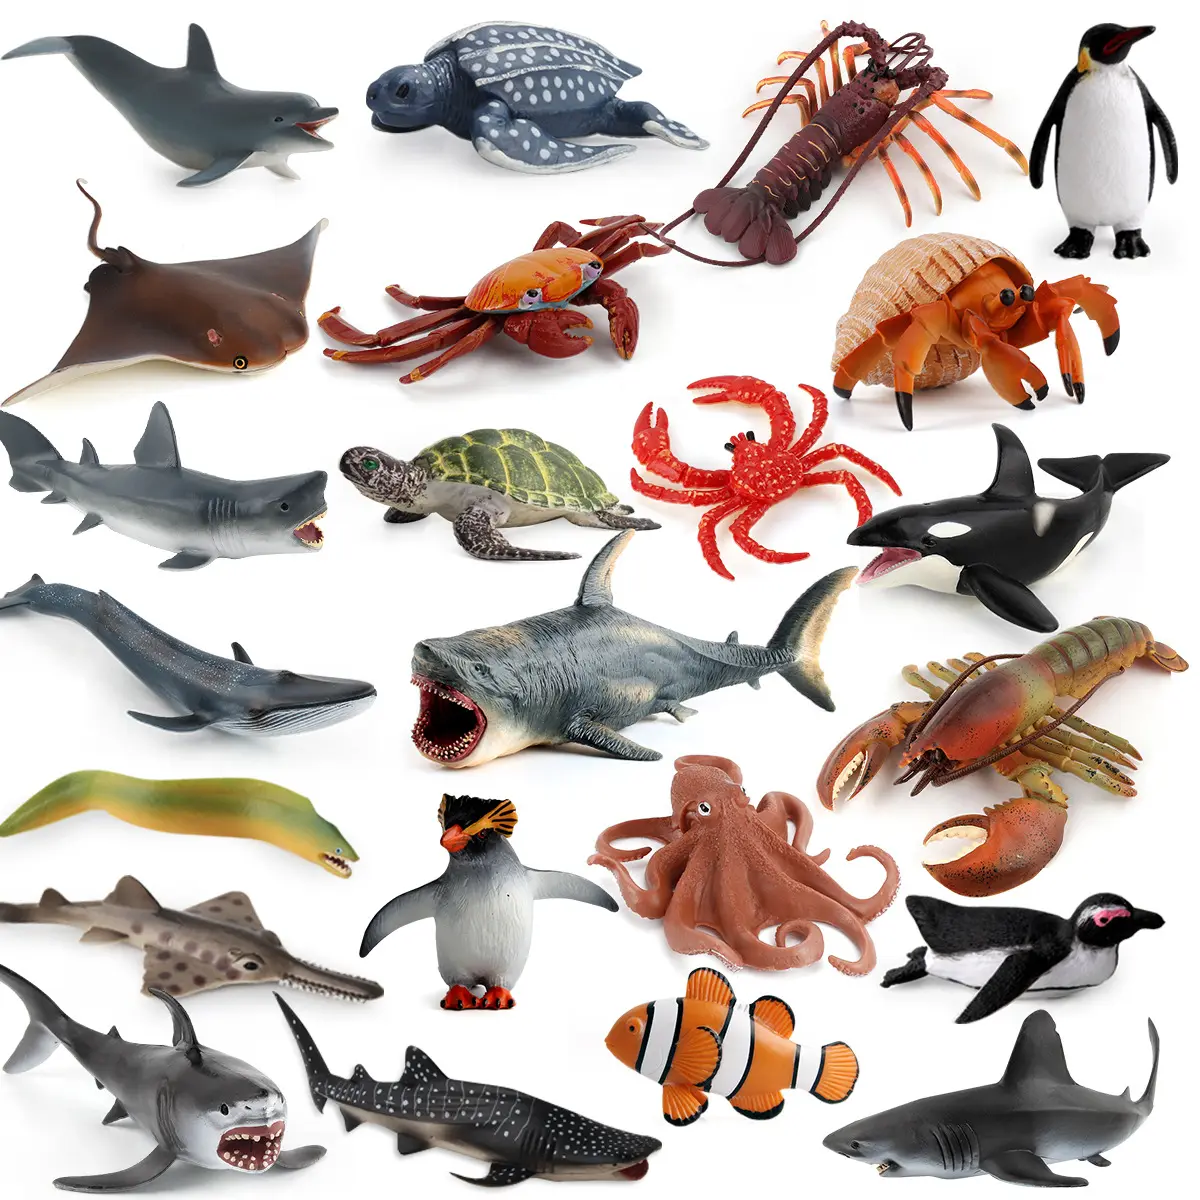 Animales Marinos en 3D, modelo de animales del mar, matamoscas, tiburón, Tortuga, pingüino, animal terrestre submarino, Tigre, gorila